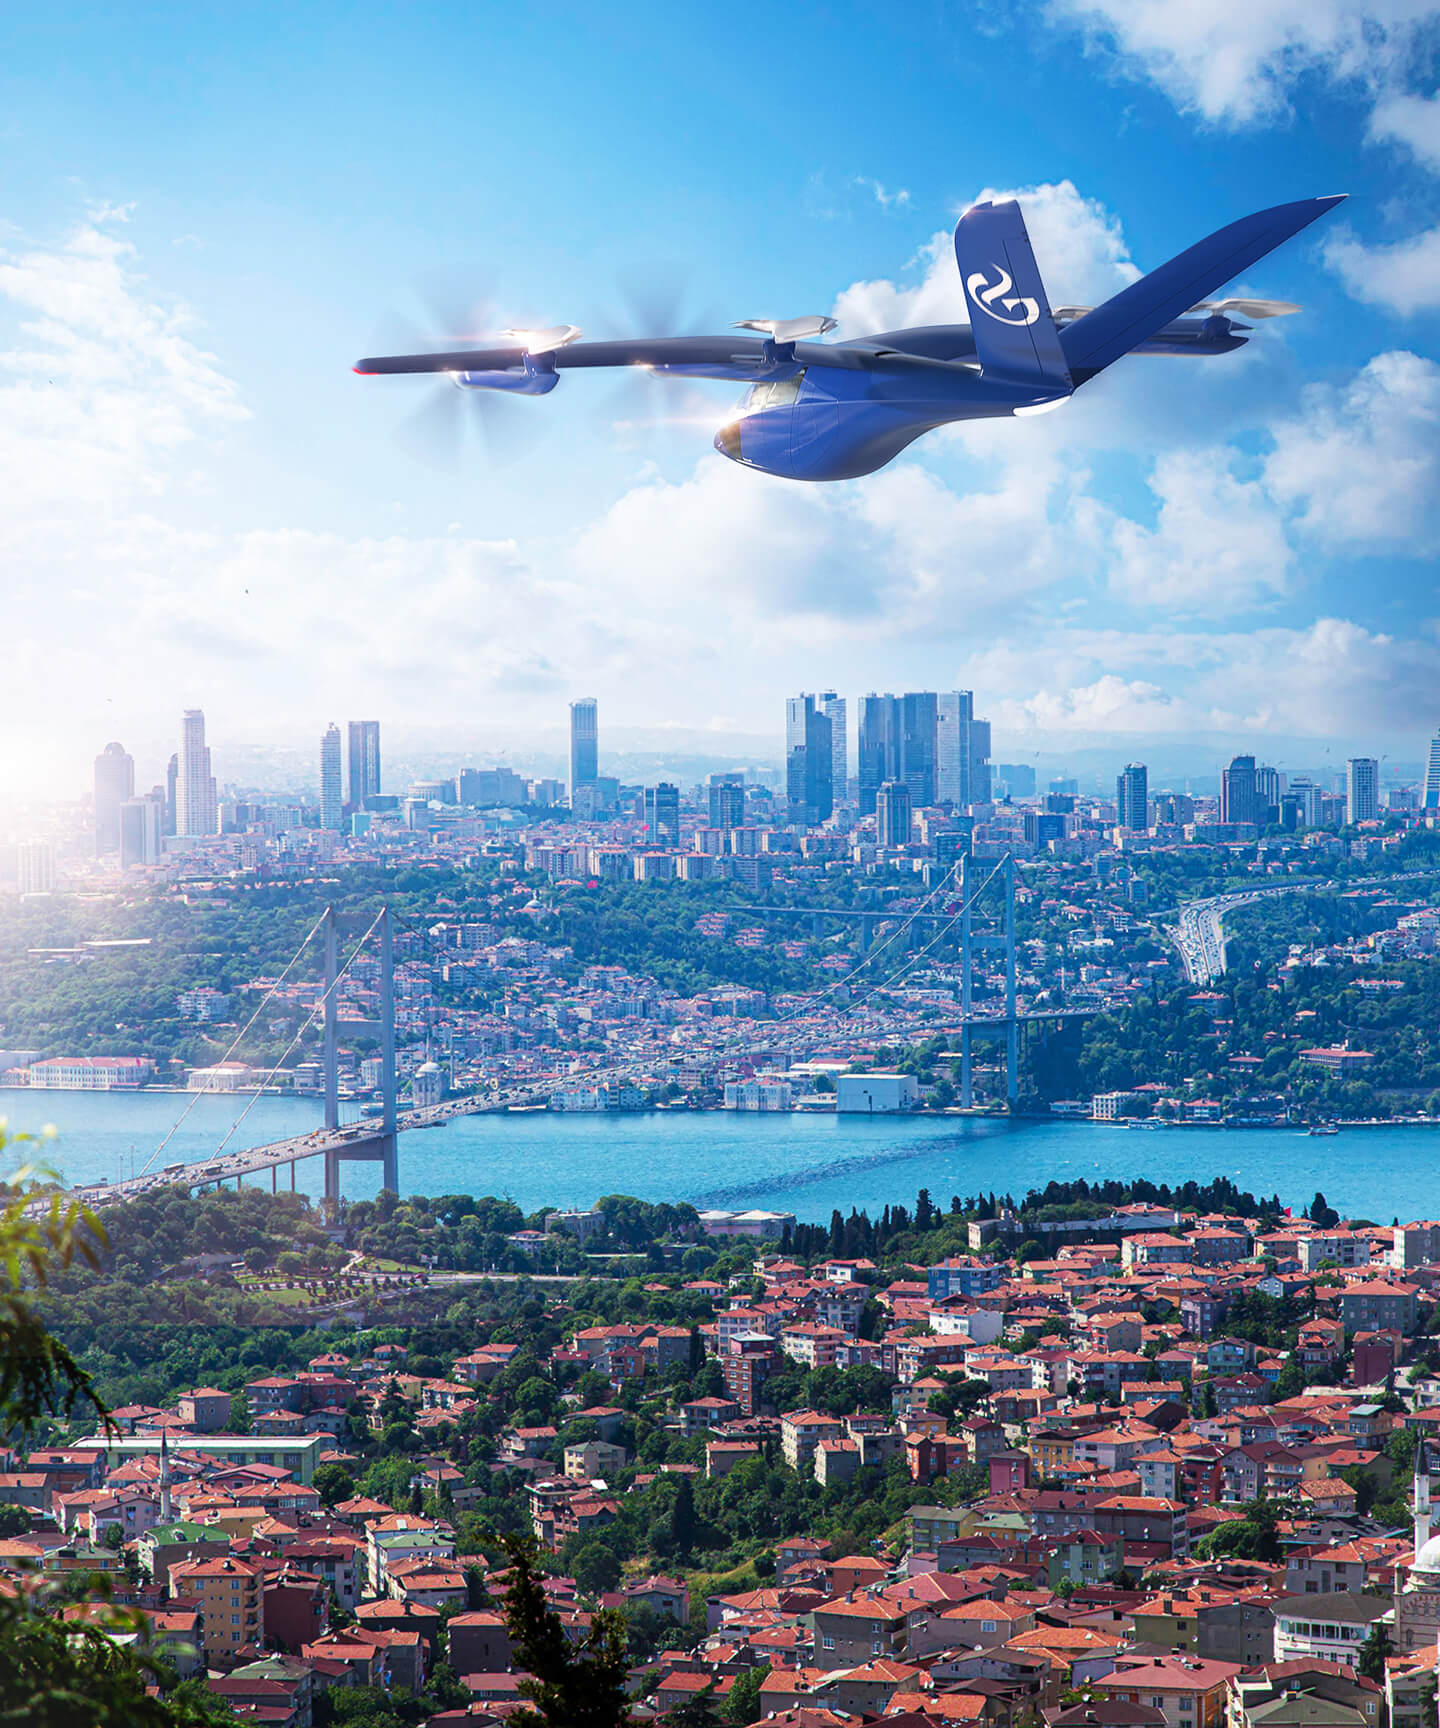 Gözen Holding Orders 100 Vx4 Aircraft From Avolon To Bring Zero Emission Air Travel To Turkey